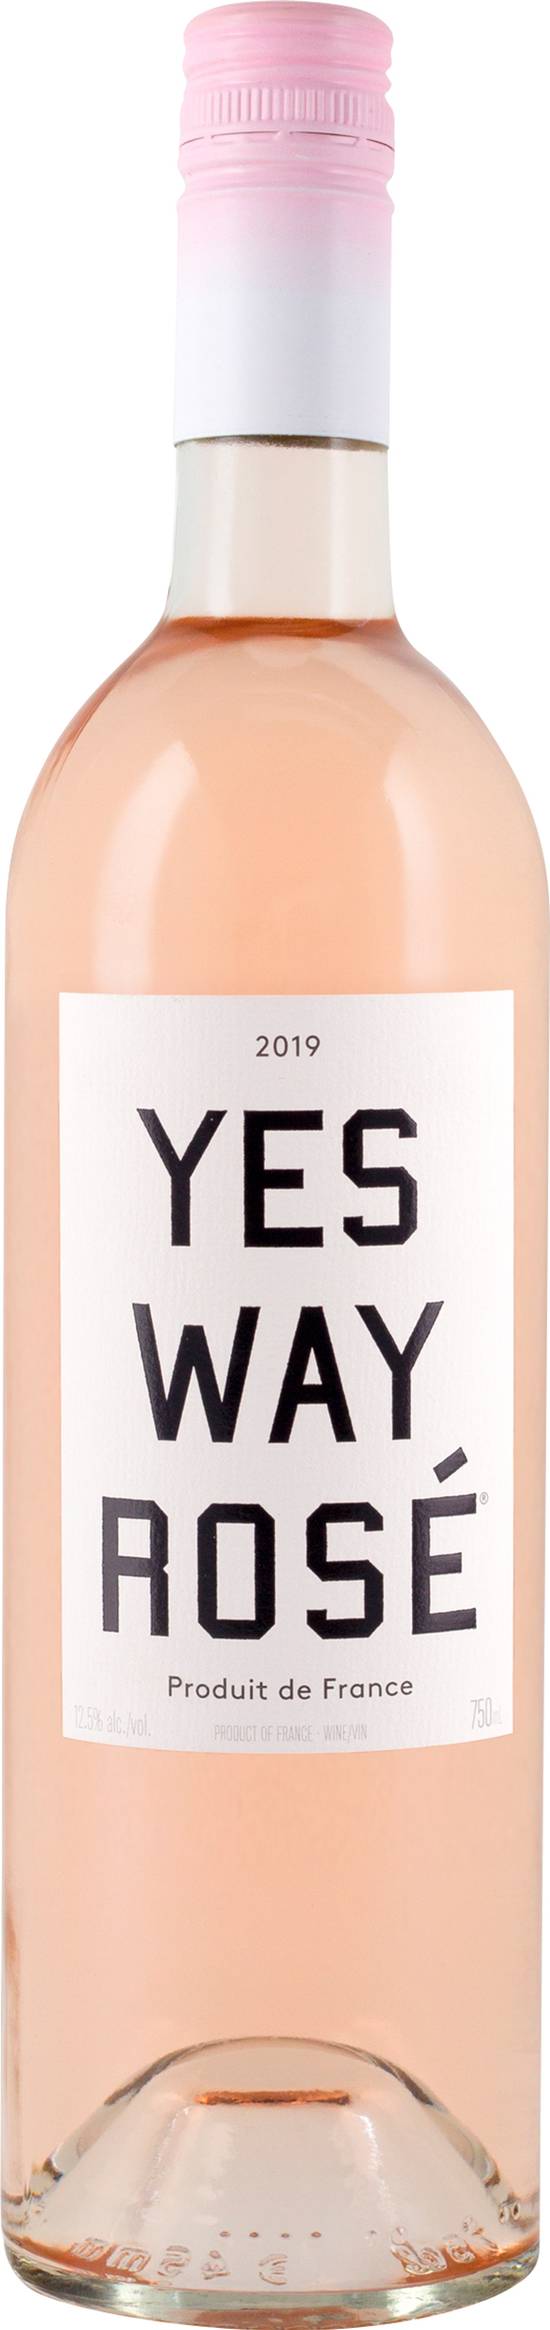 Yes Way Rose Dry Rose Wine 2019 (750 ml)